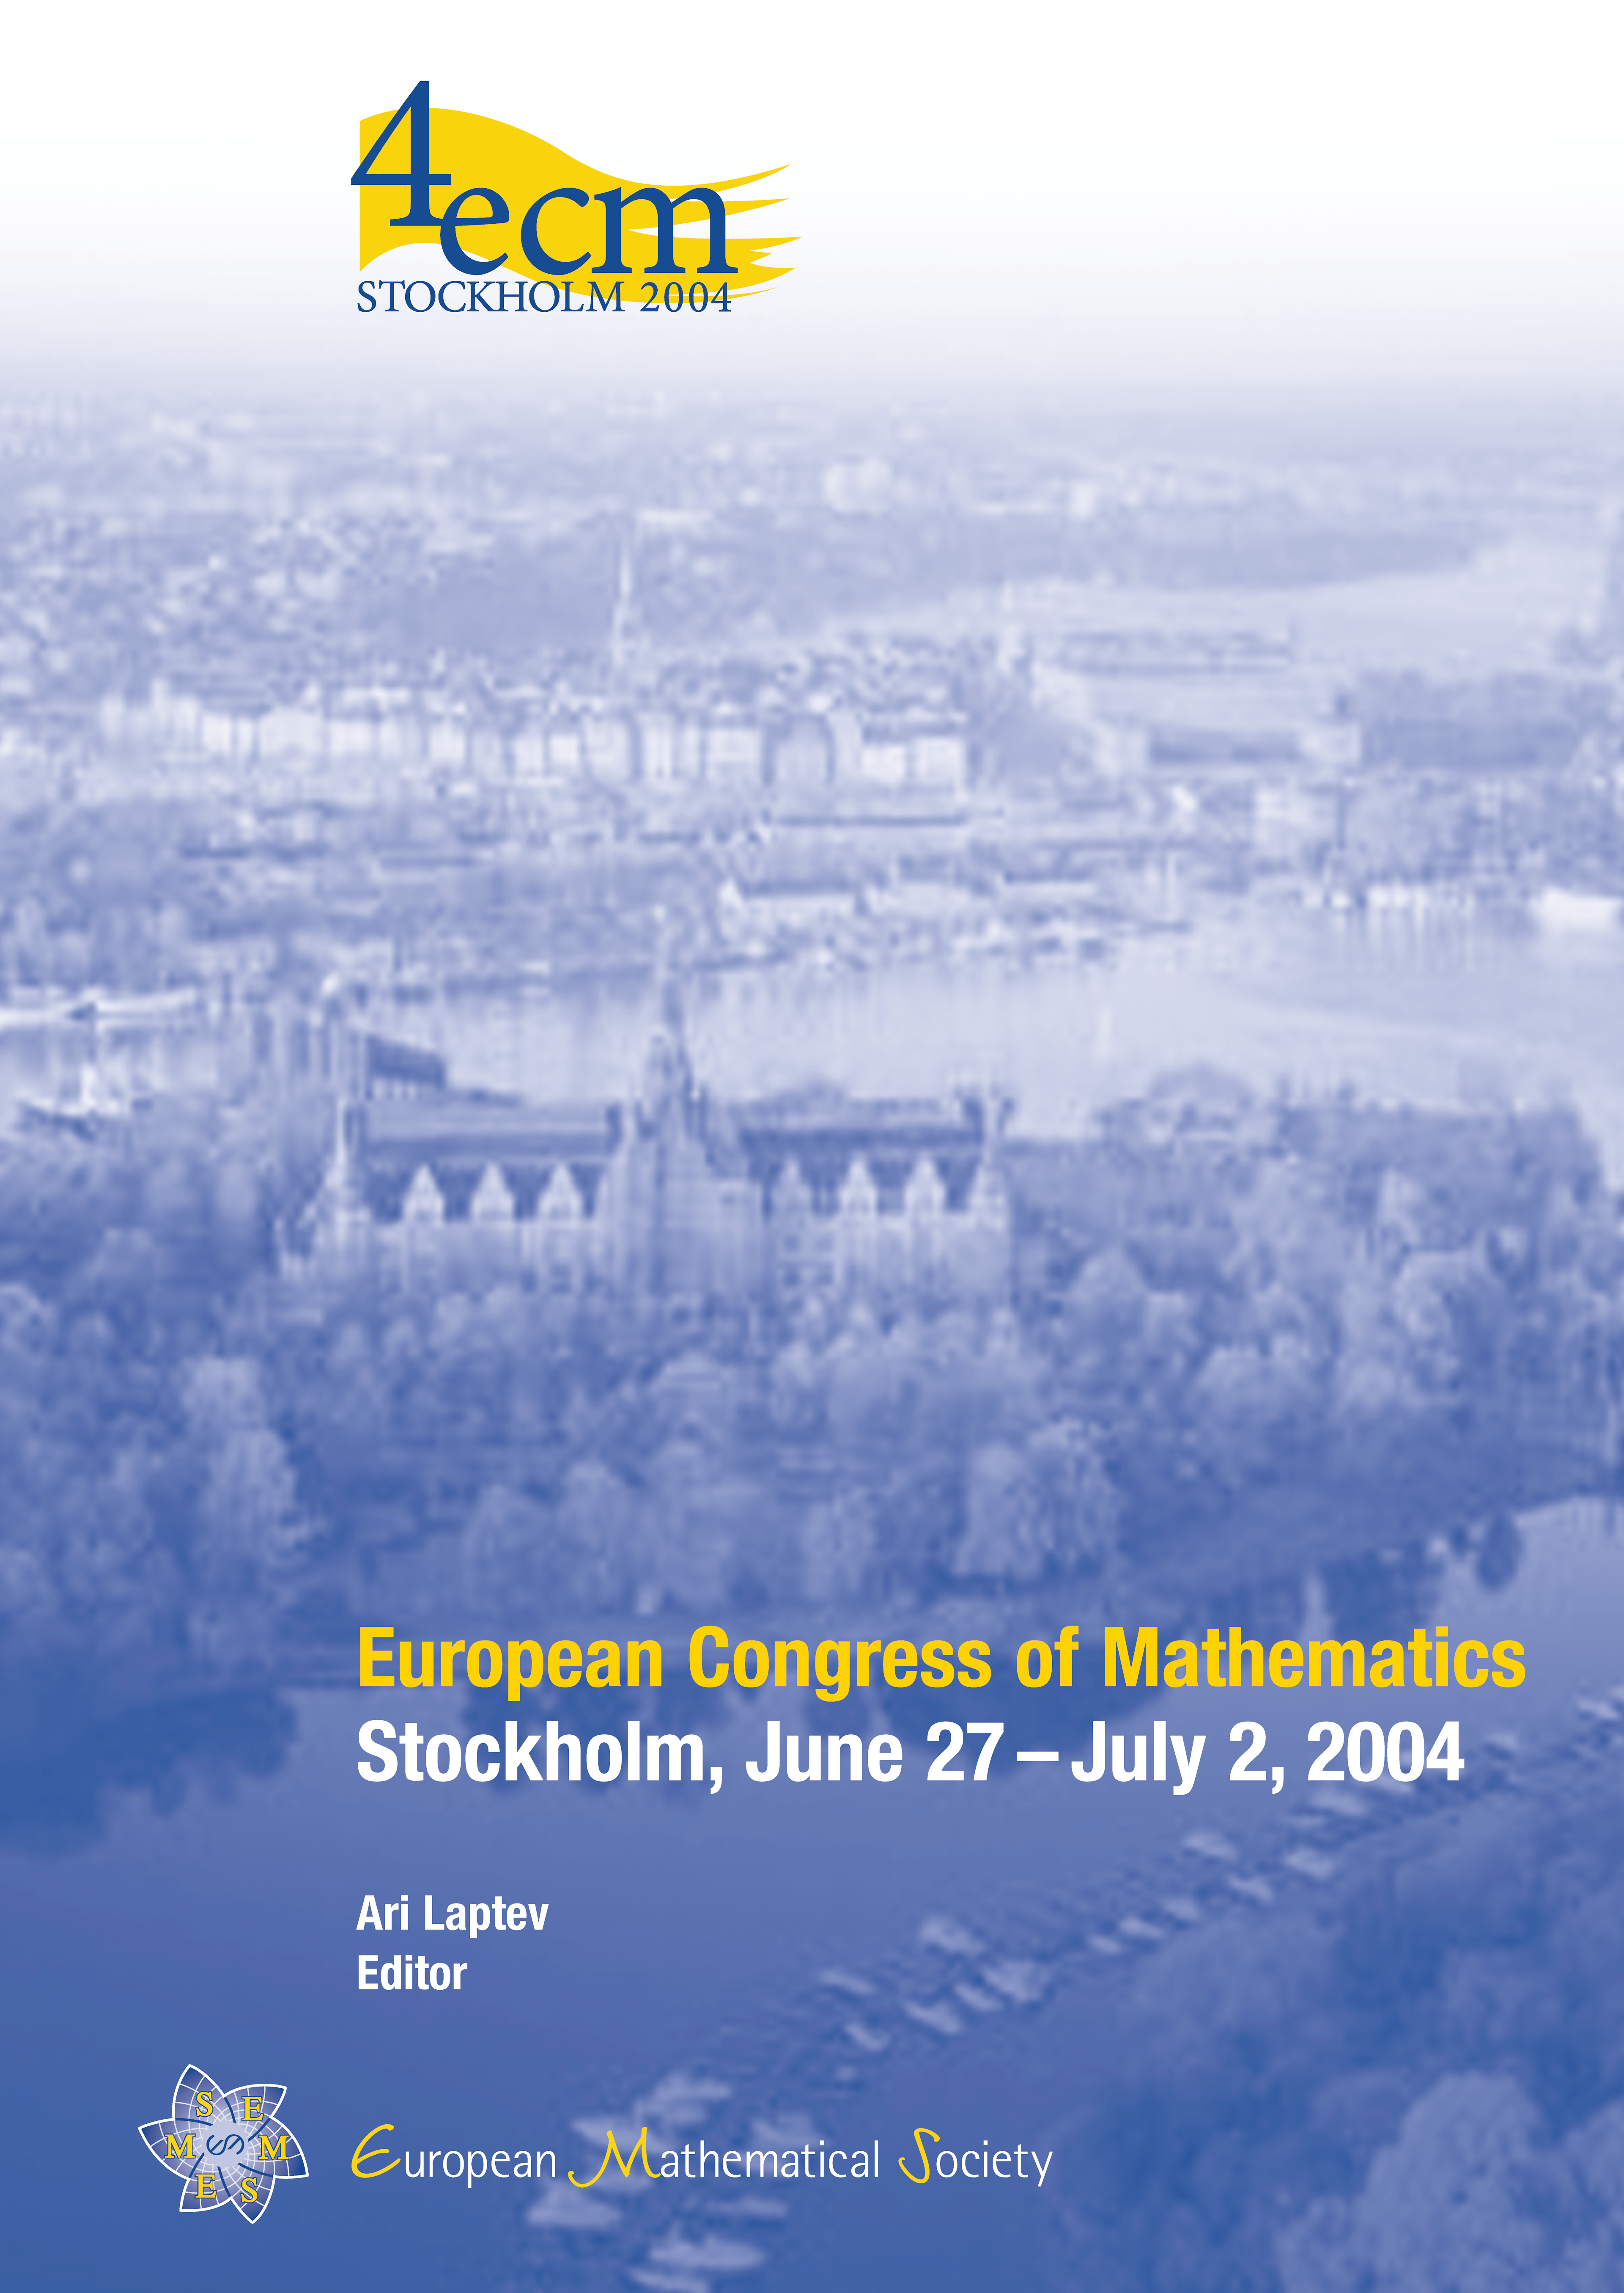 The Research Training Network “Algebraic Combinatorics in Europe” cover